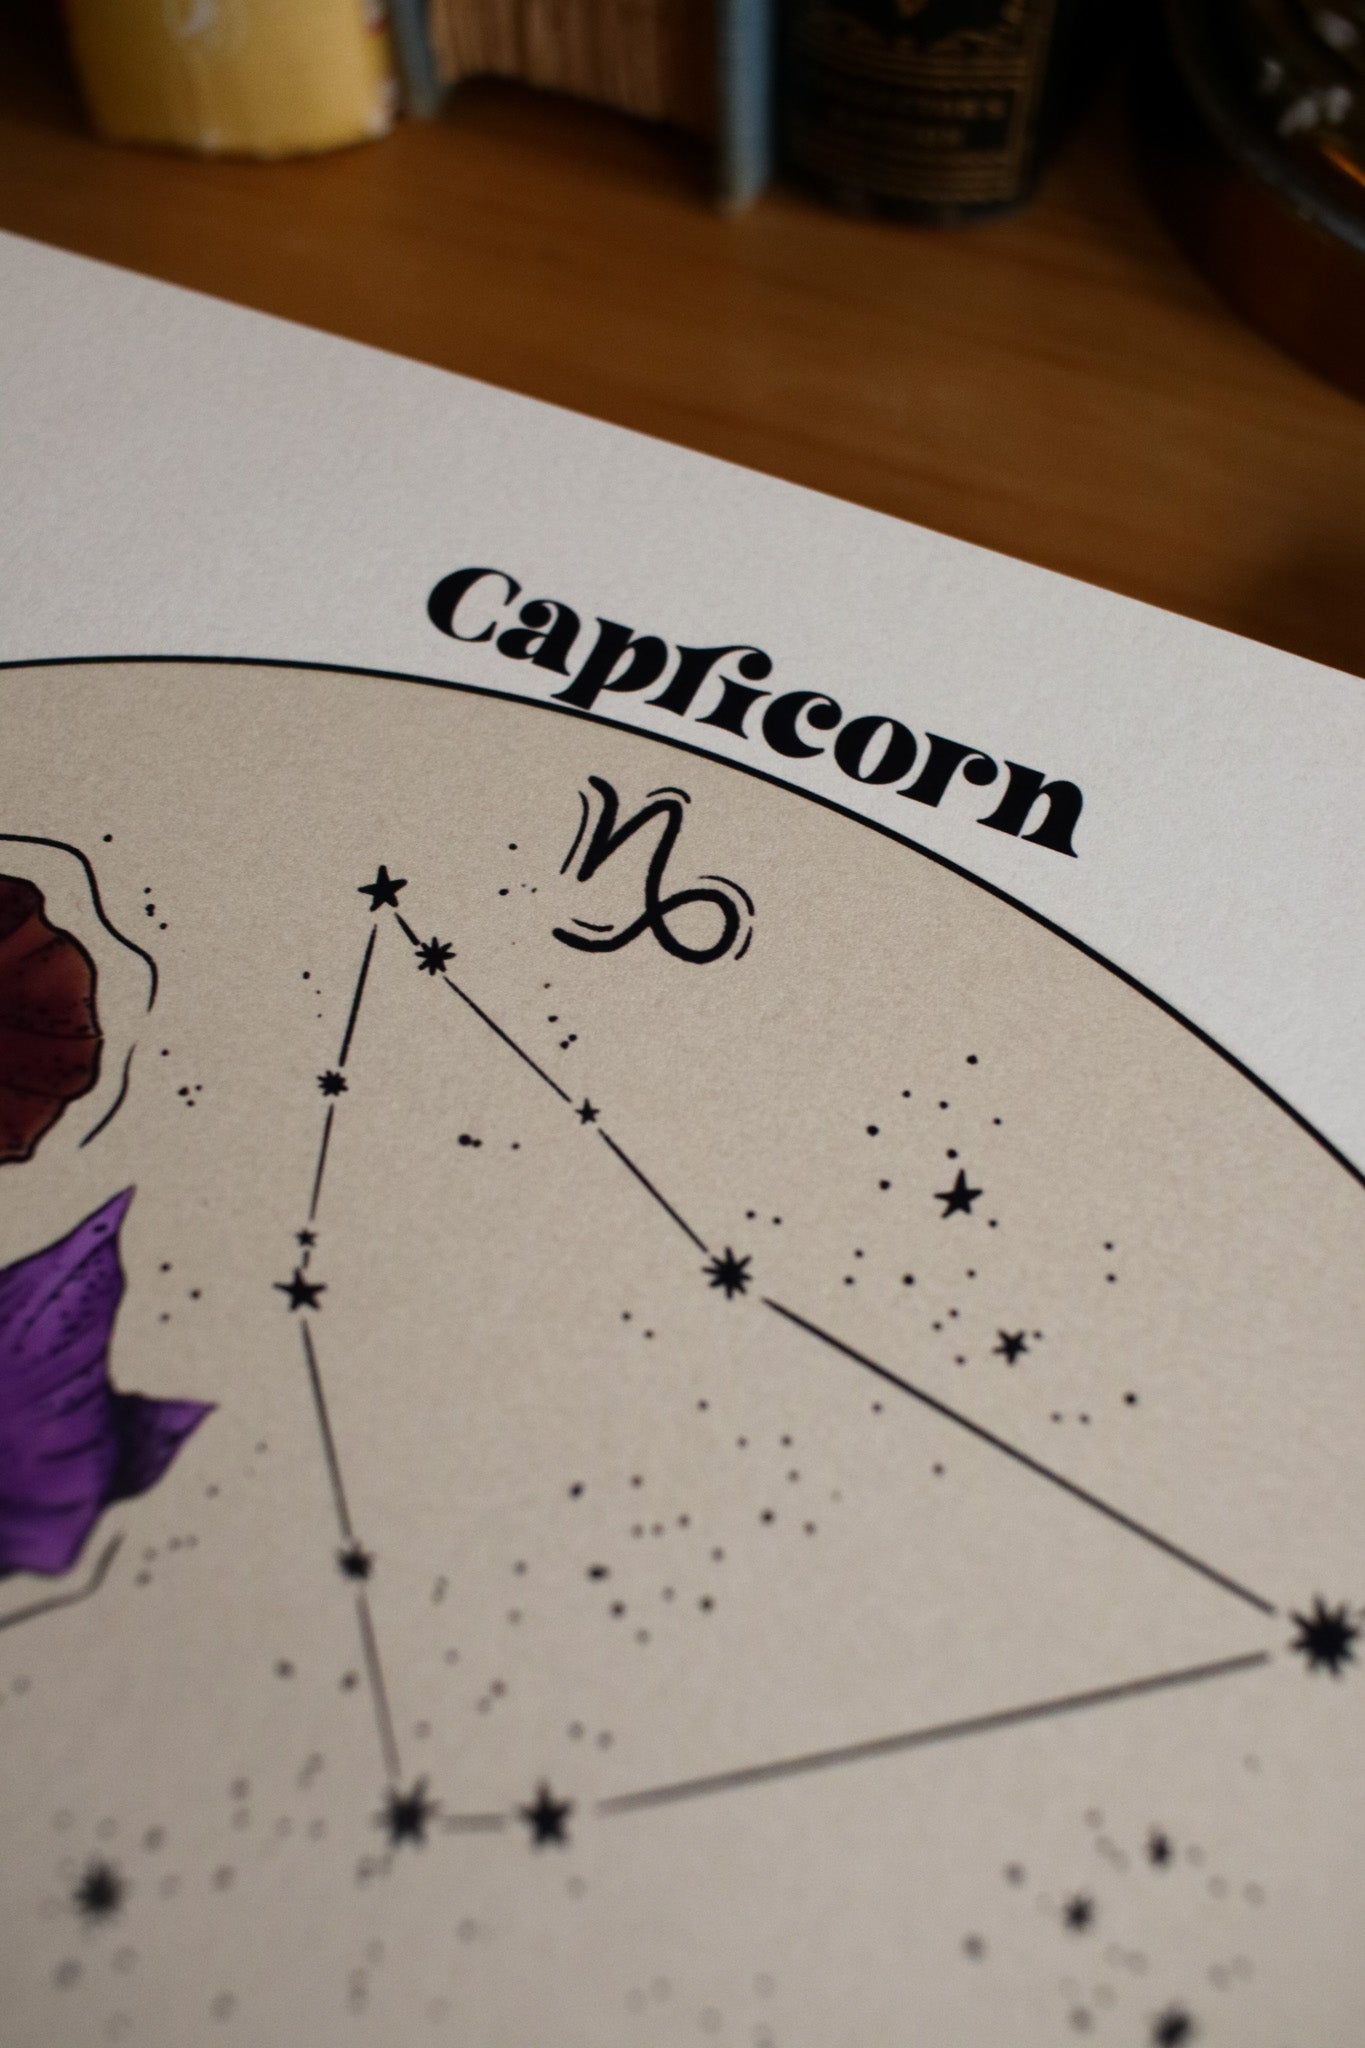 Capricorn - Astrology Infographic